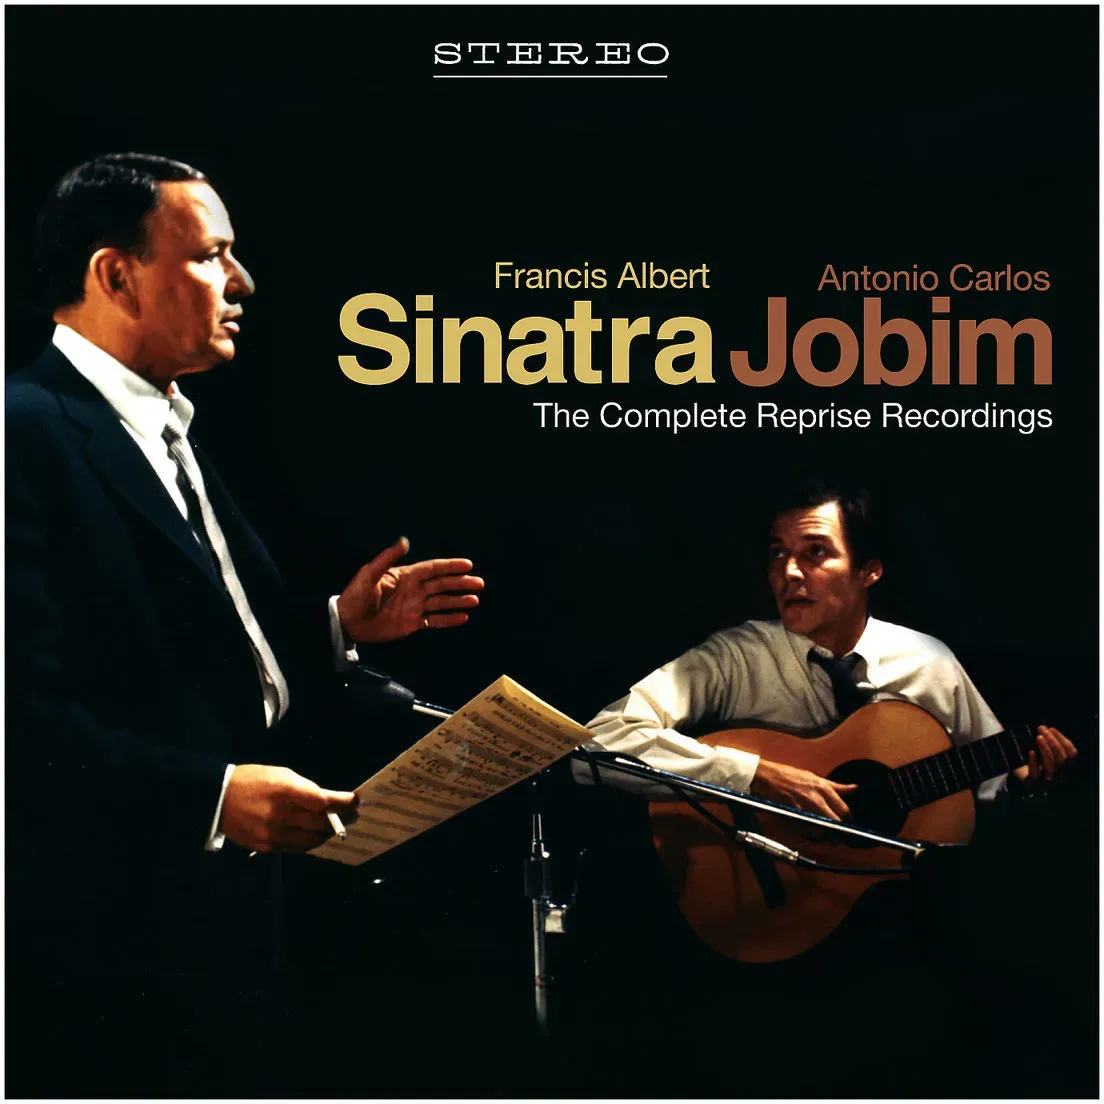 Sinatra/ Jobim:
The Complete Reprise Recordings - Frank Sinatra  Antonio Carlos Jobim. (CD)